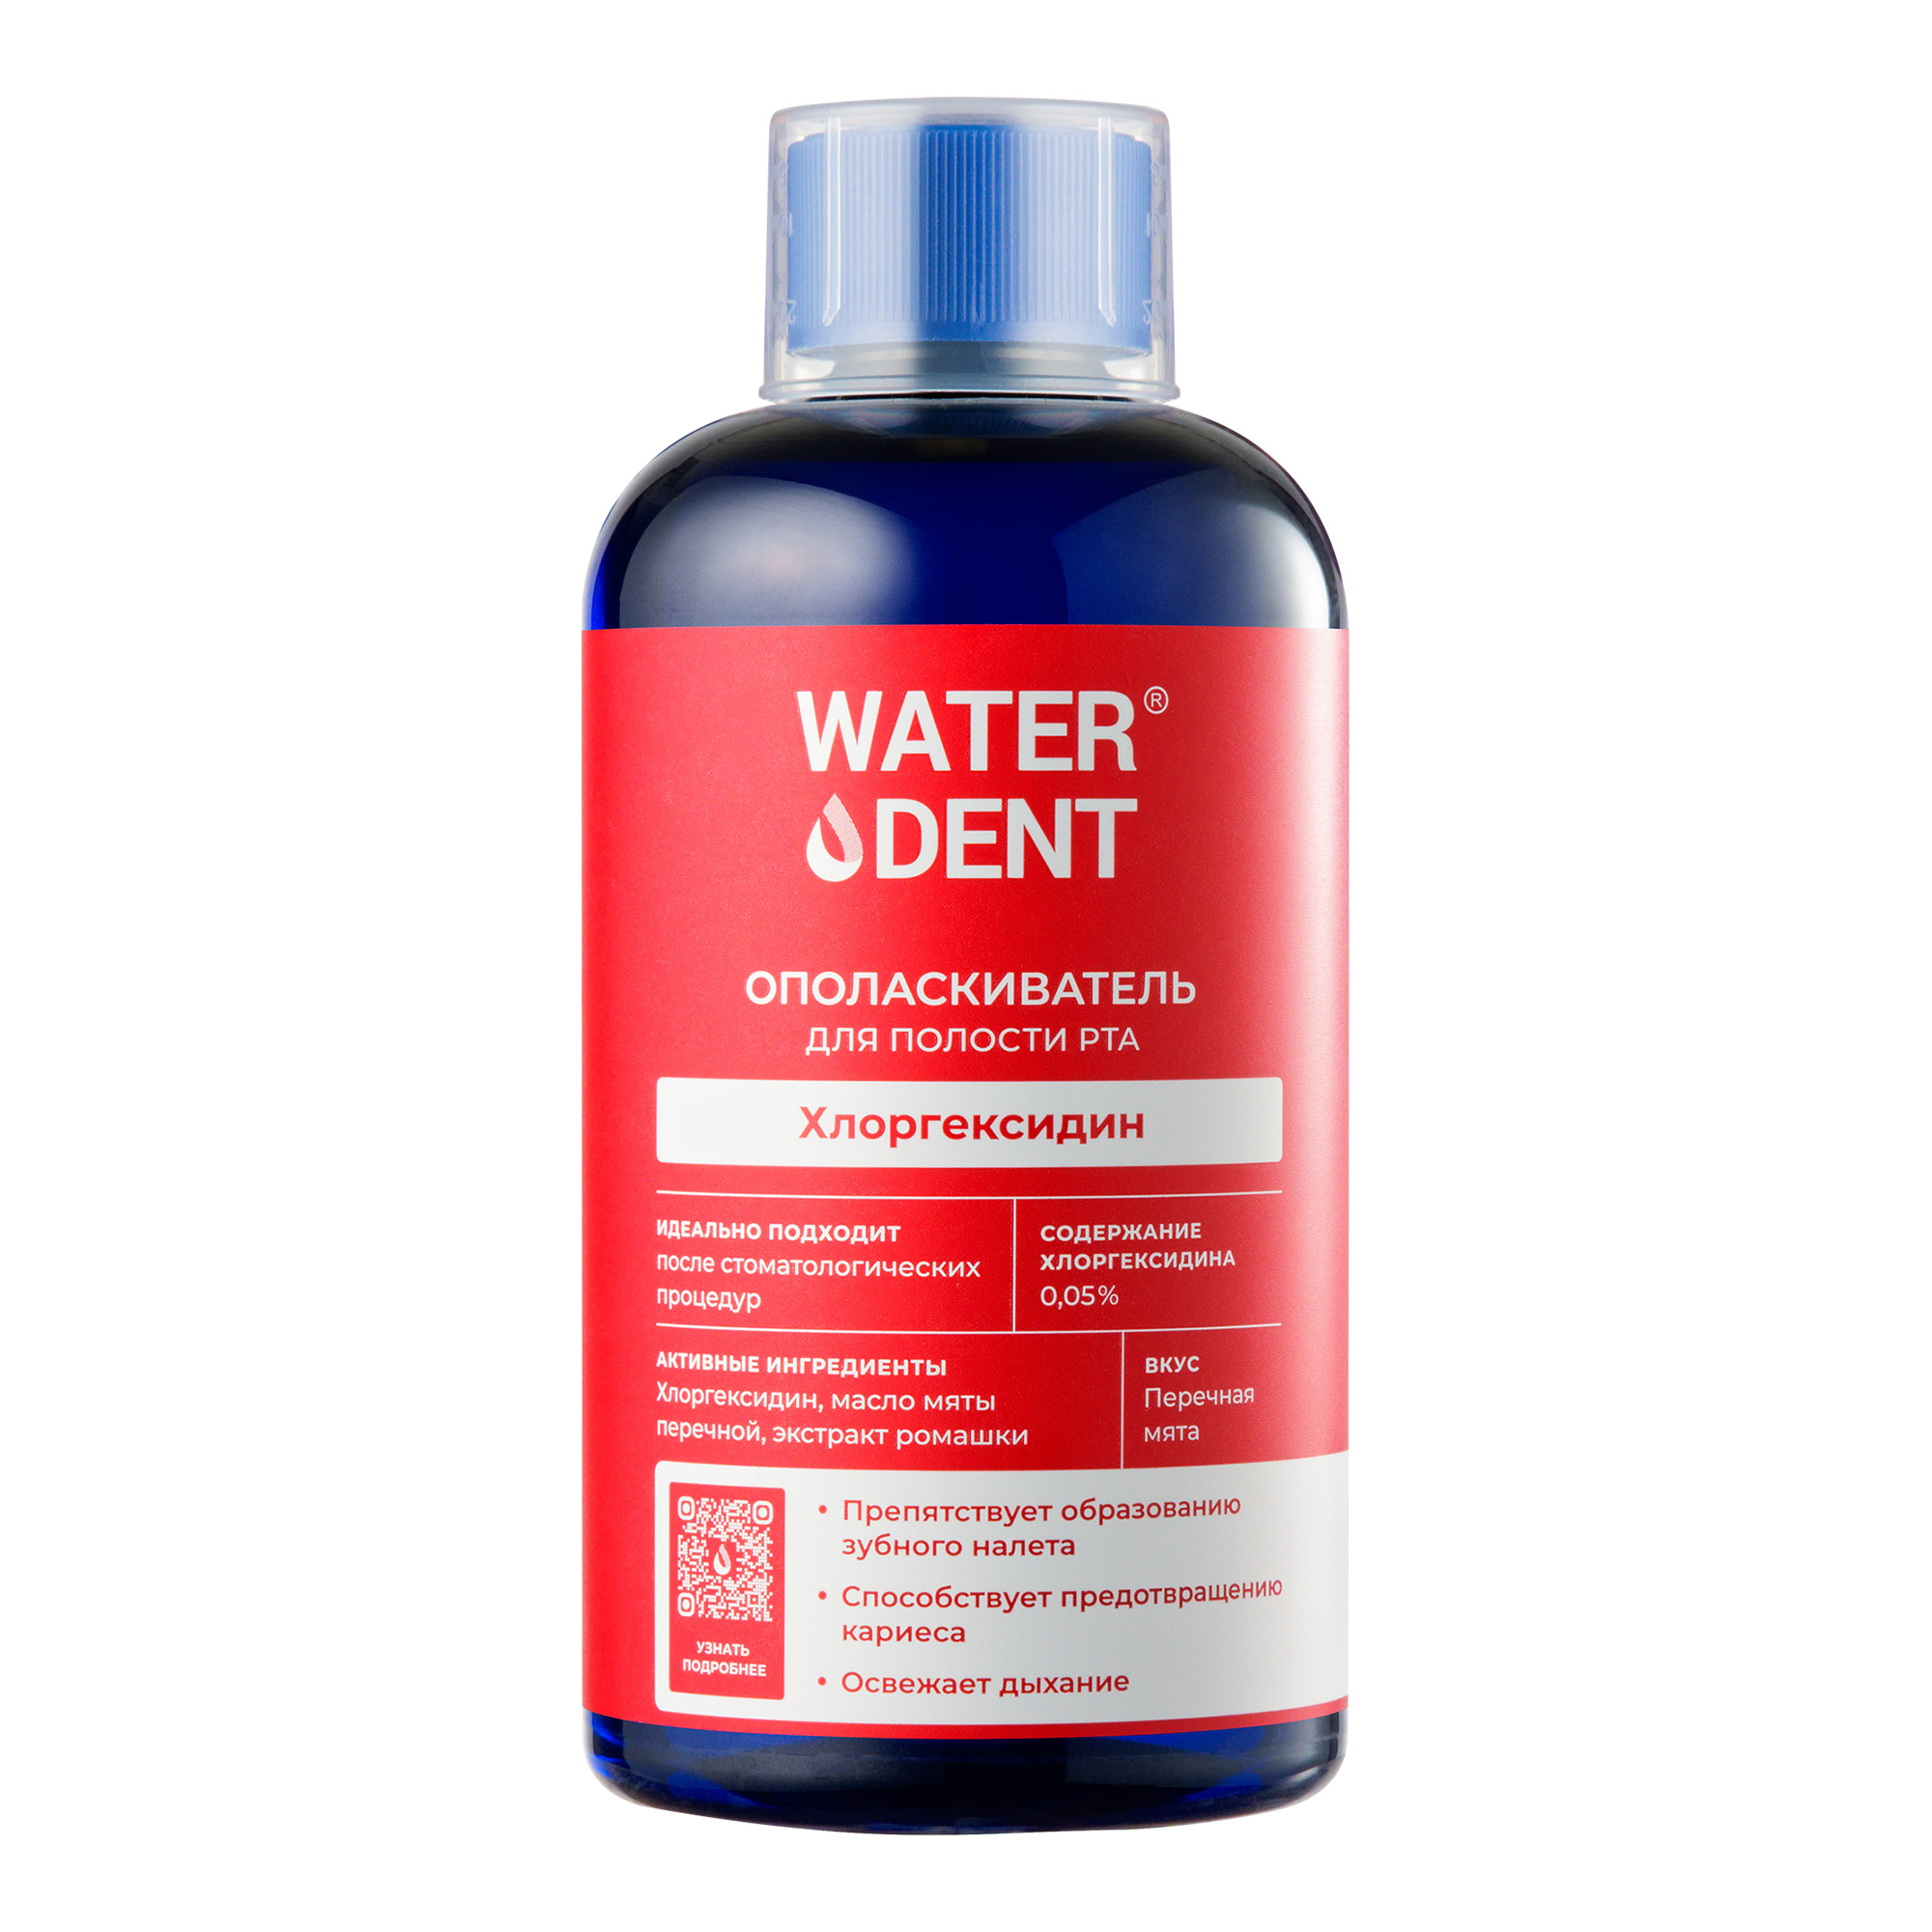 Waterdent, ополаскиватель для полости рта Хлоргексидин со вкусом мяты, 500 мл waterdent ополаскиватель для полости рта хлоргексидин со вкусом мяты 500 мл